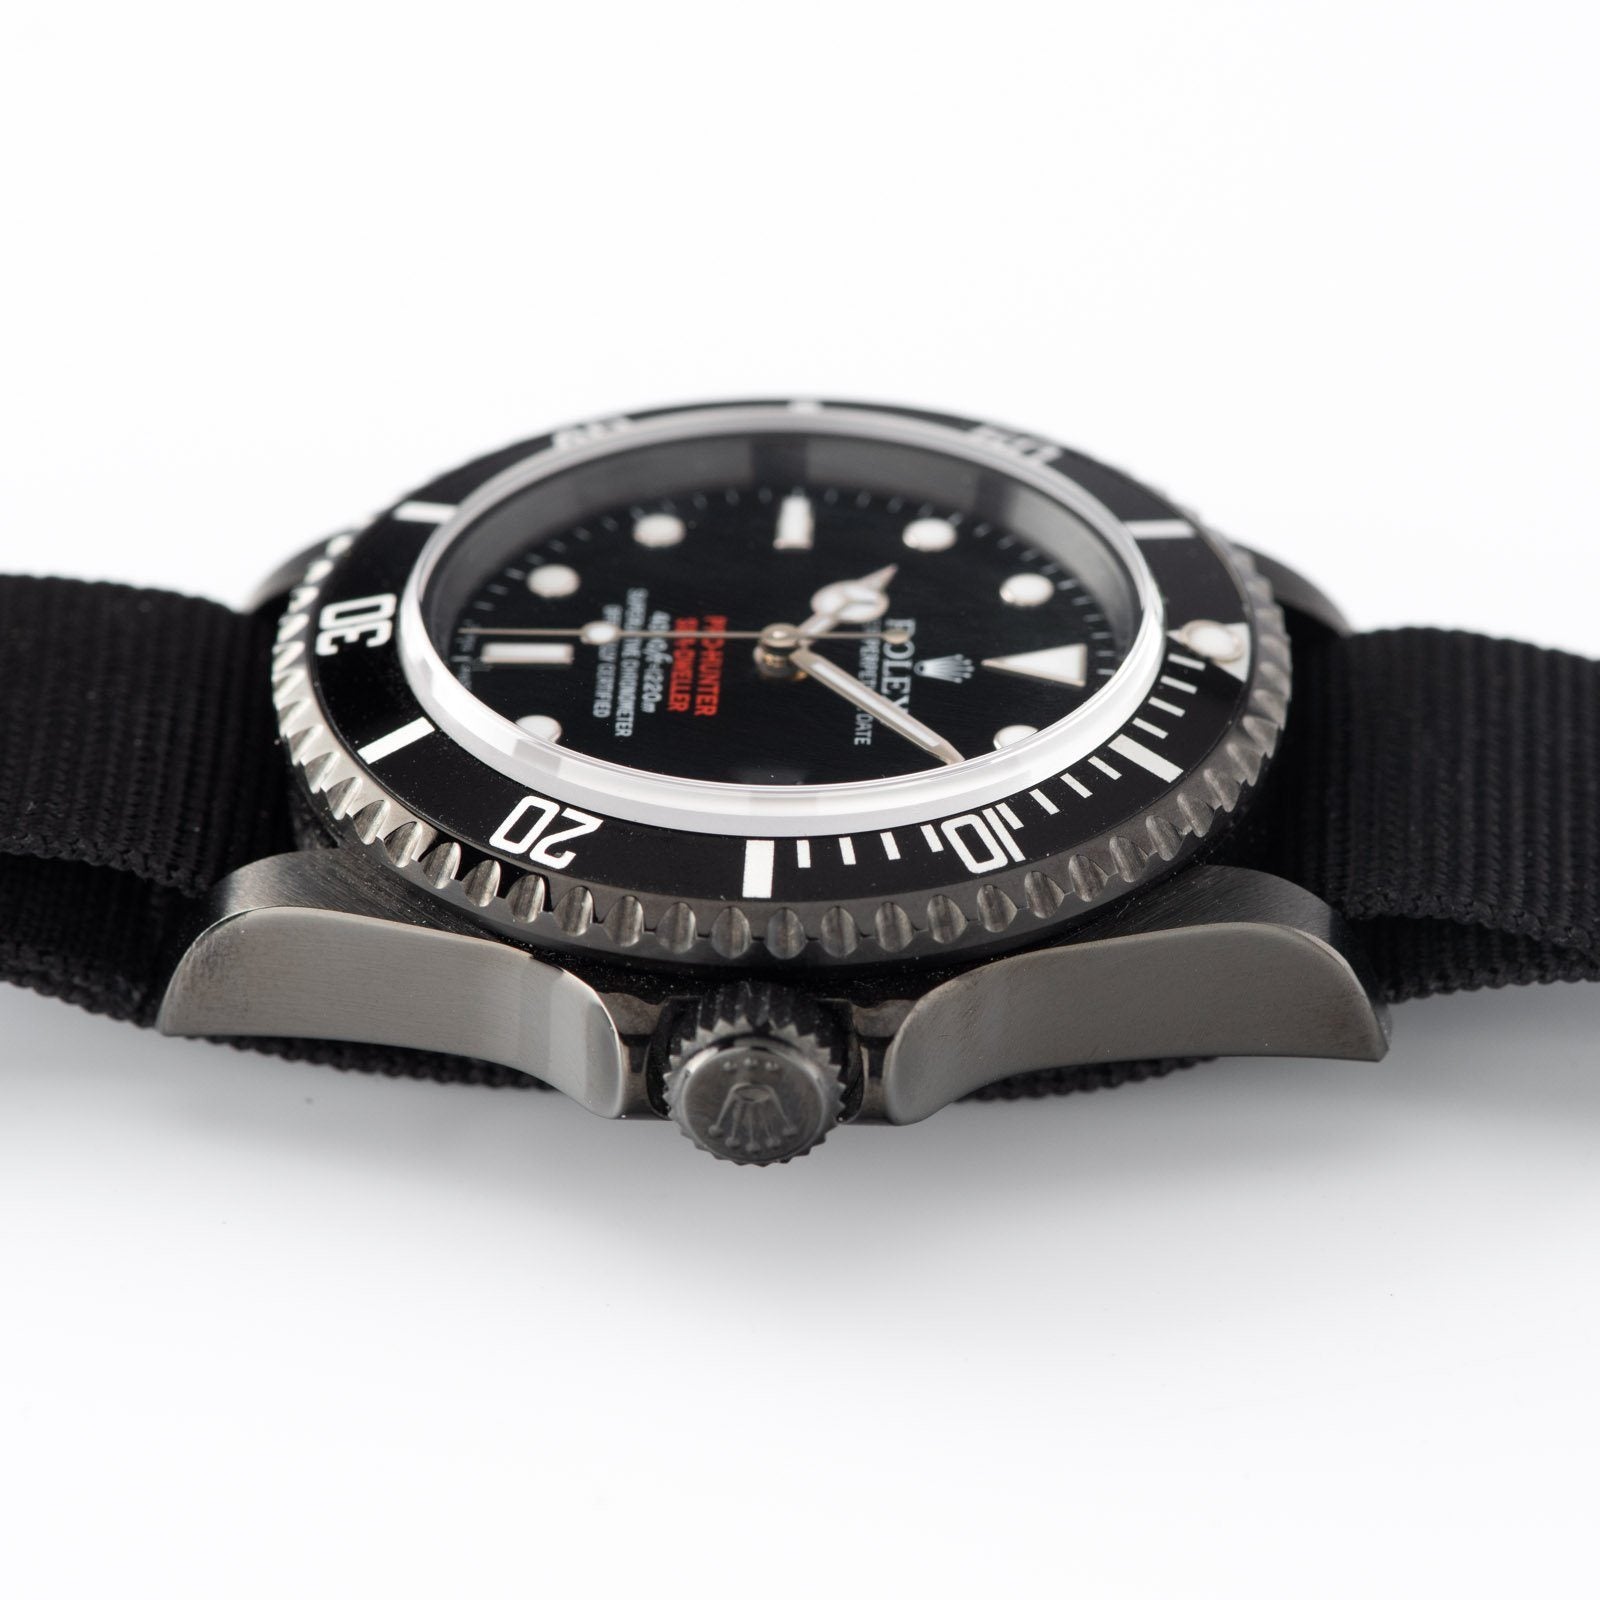 Rolex Pro Hunter Seadweller Reference 16600 Black DLC Coated